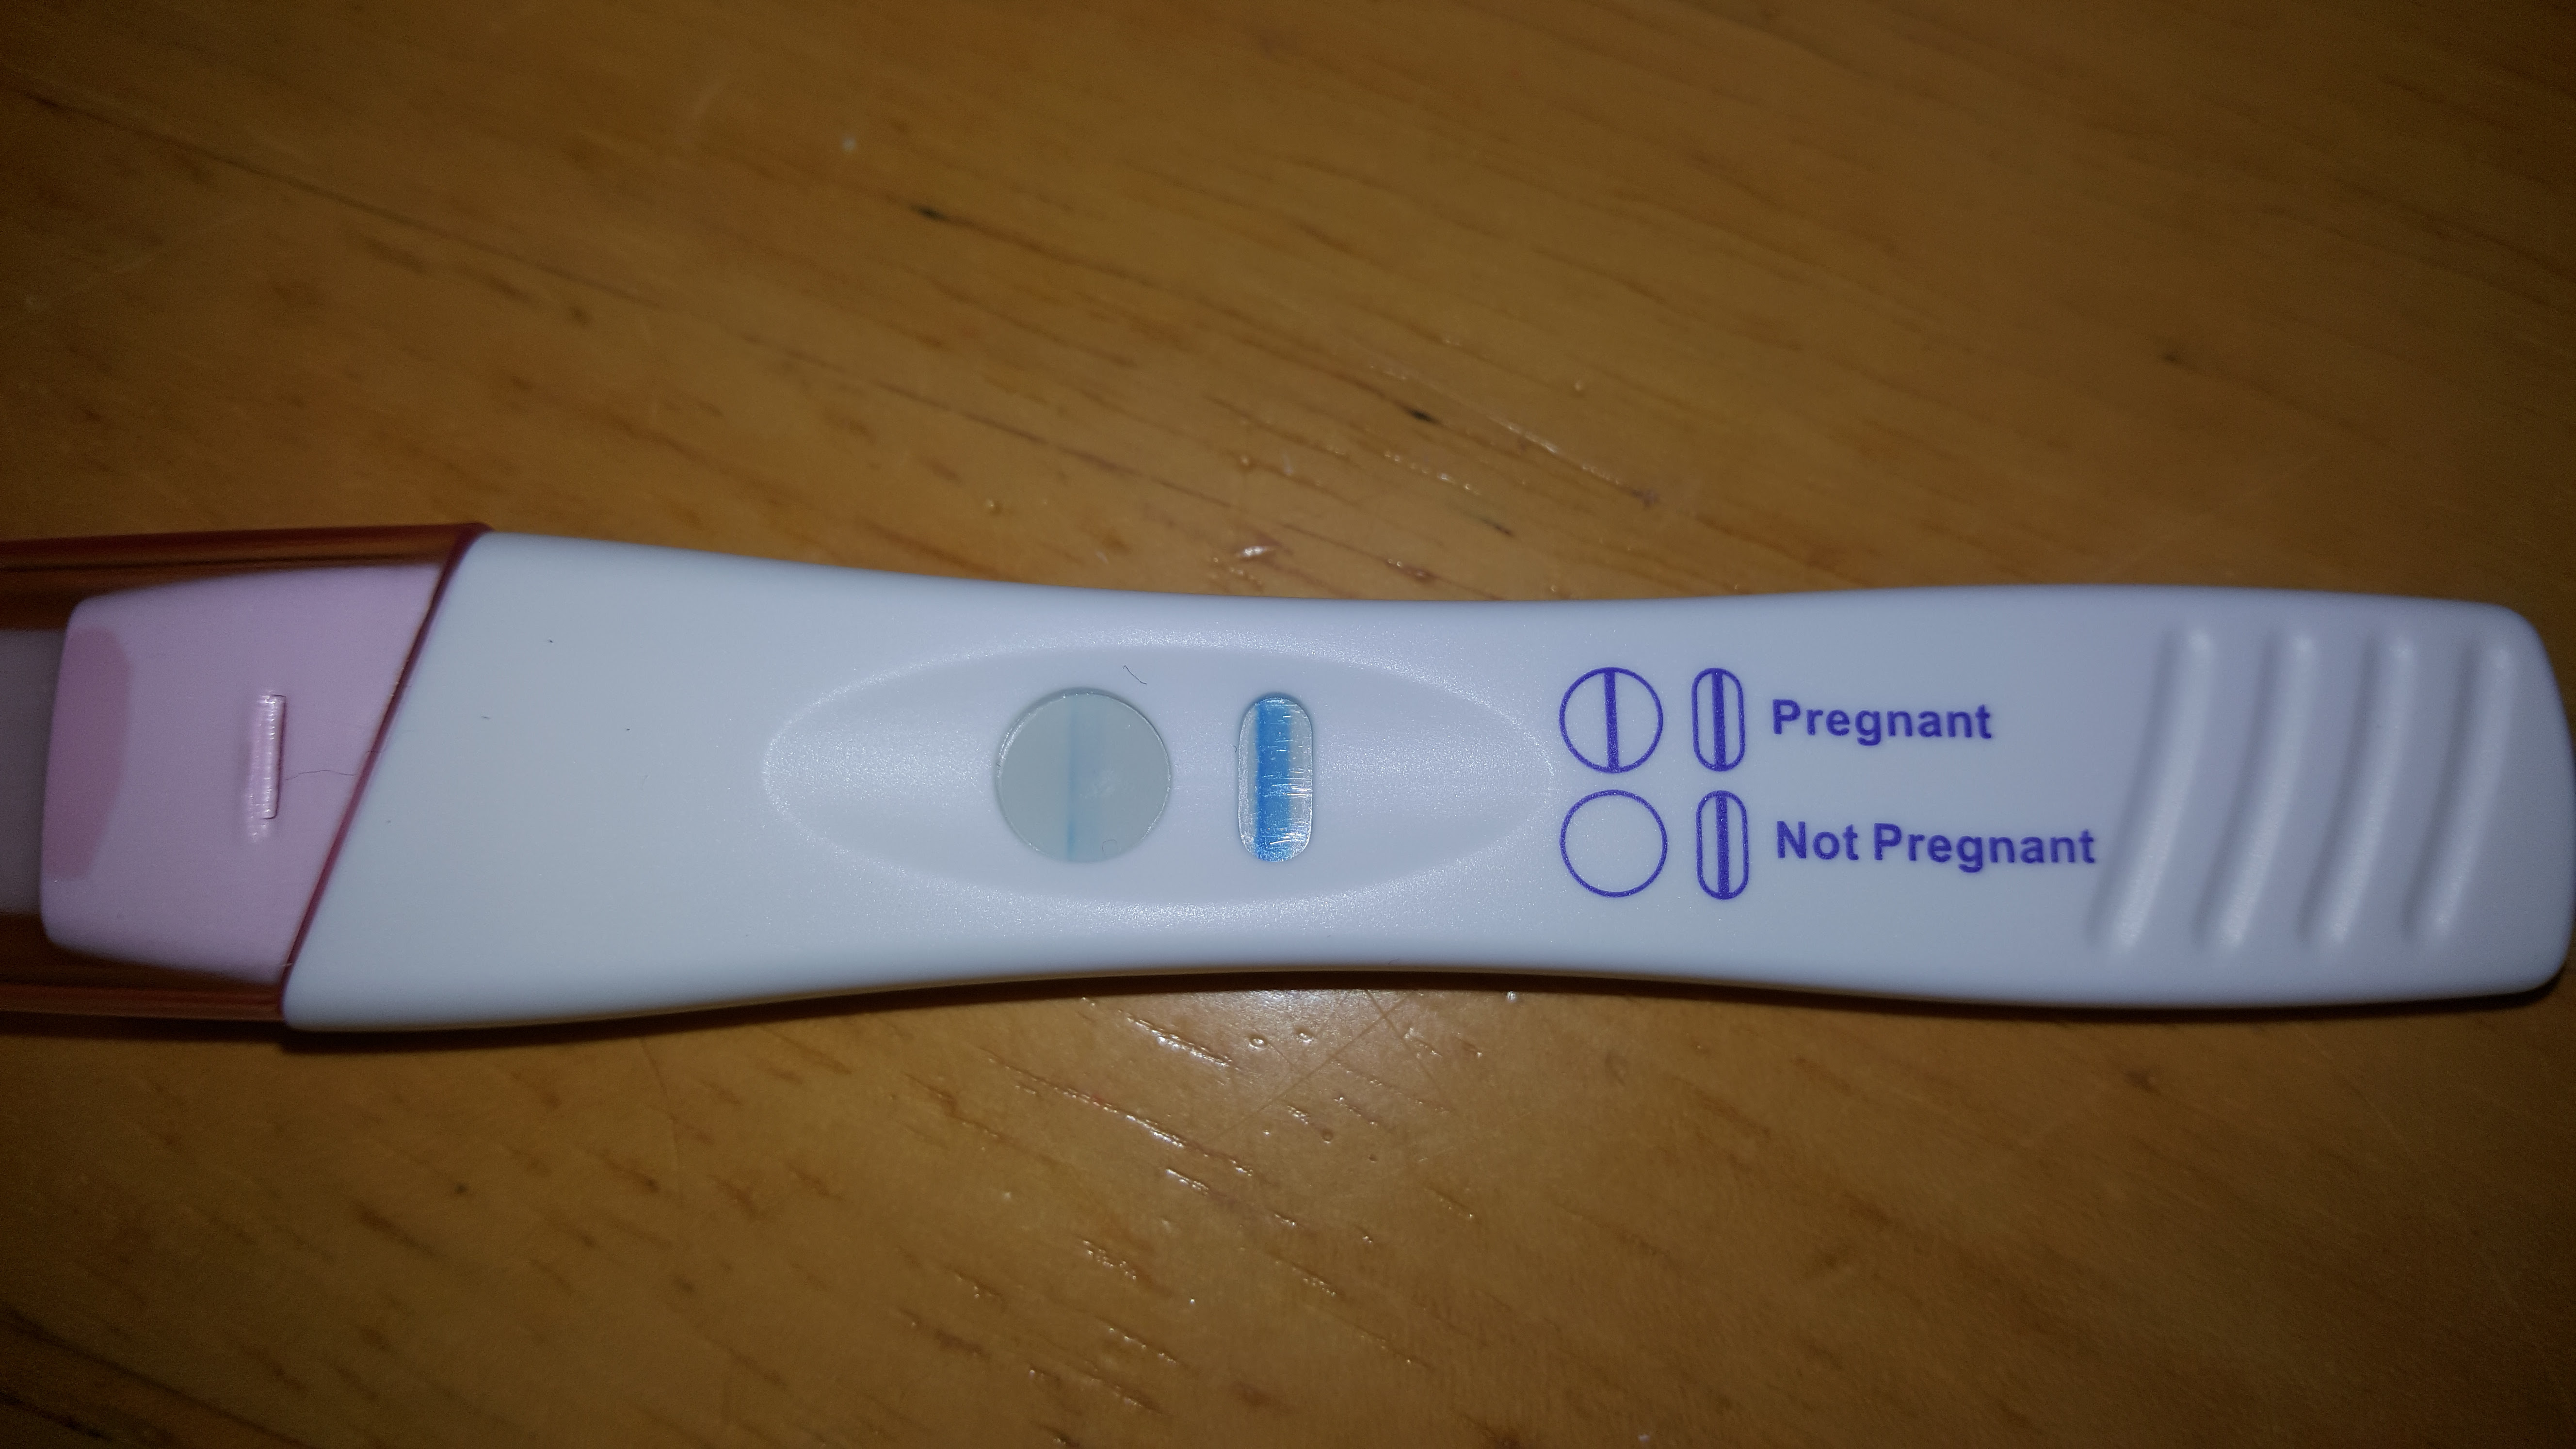 Evap Line  On Clearblue Pregnancy  Test  Pregnancy  Test  Work